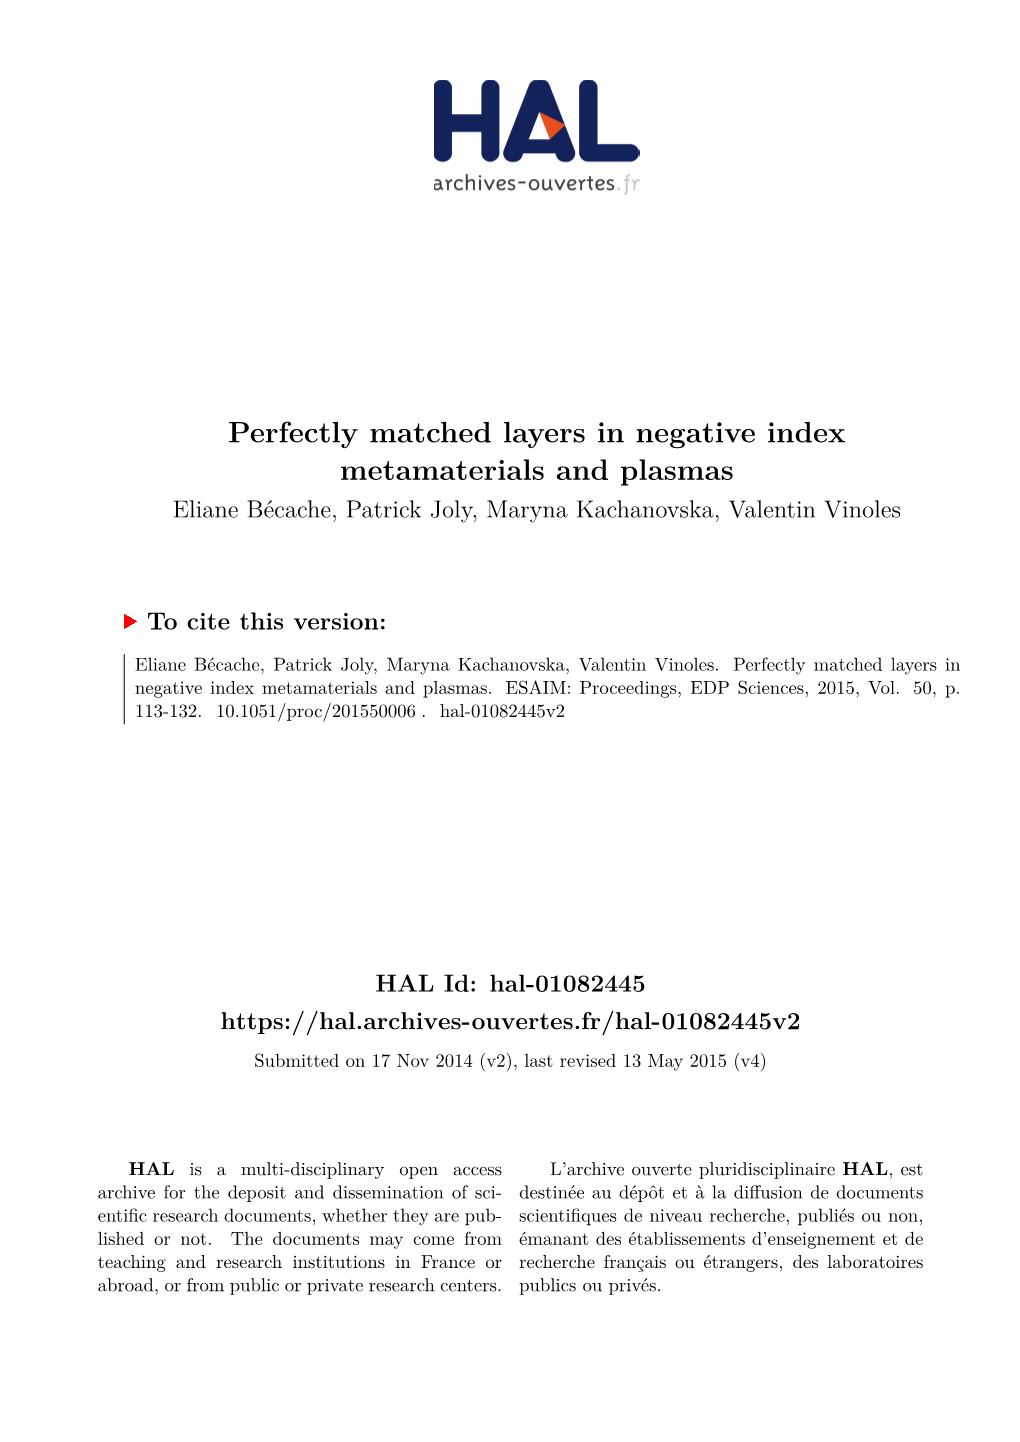 Perfectly Matched Layers in Negative Index Metamaterials and Plasmas Eliane Bécache, Patrick Joly, Maryna Kachanovska, Valentin Vinoles